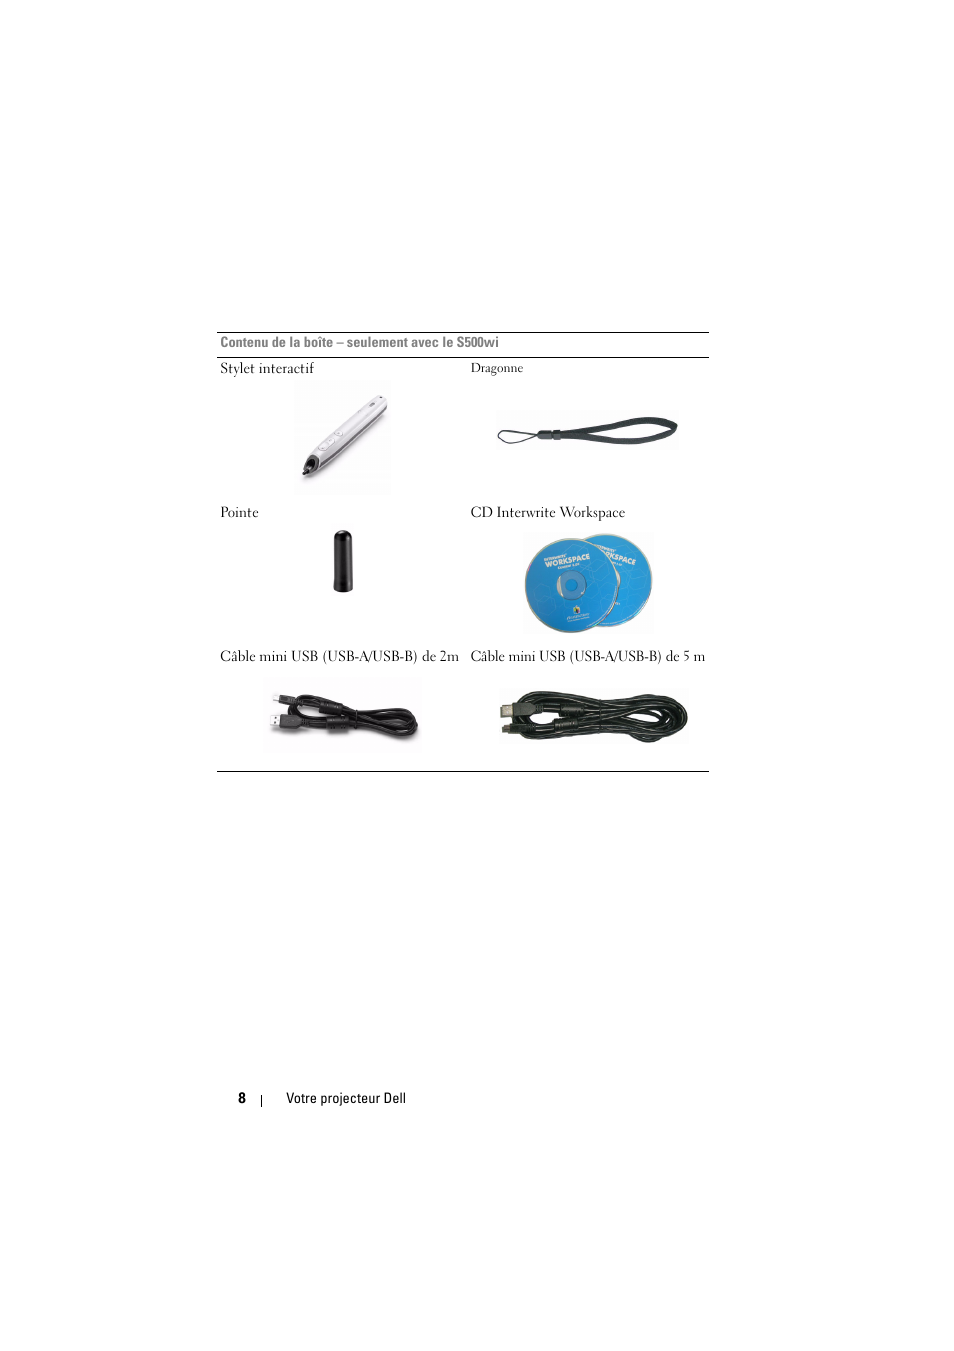 Dell S500 Projector Manuel d'utilisation | Page 8 / 134